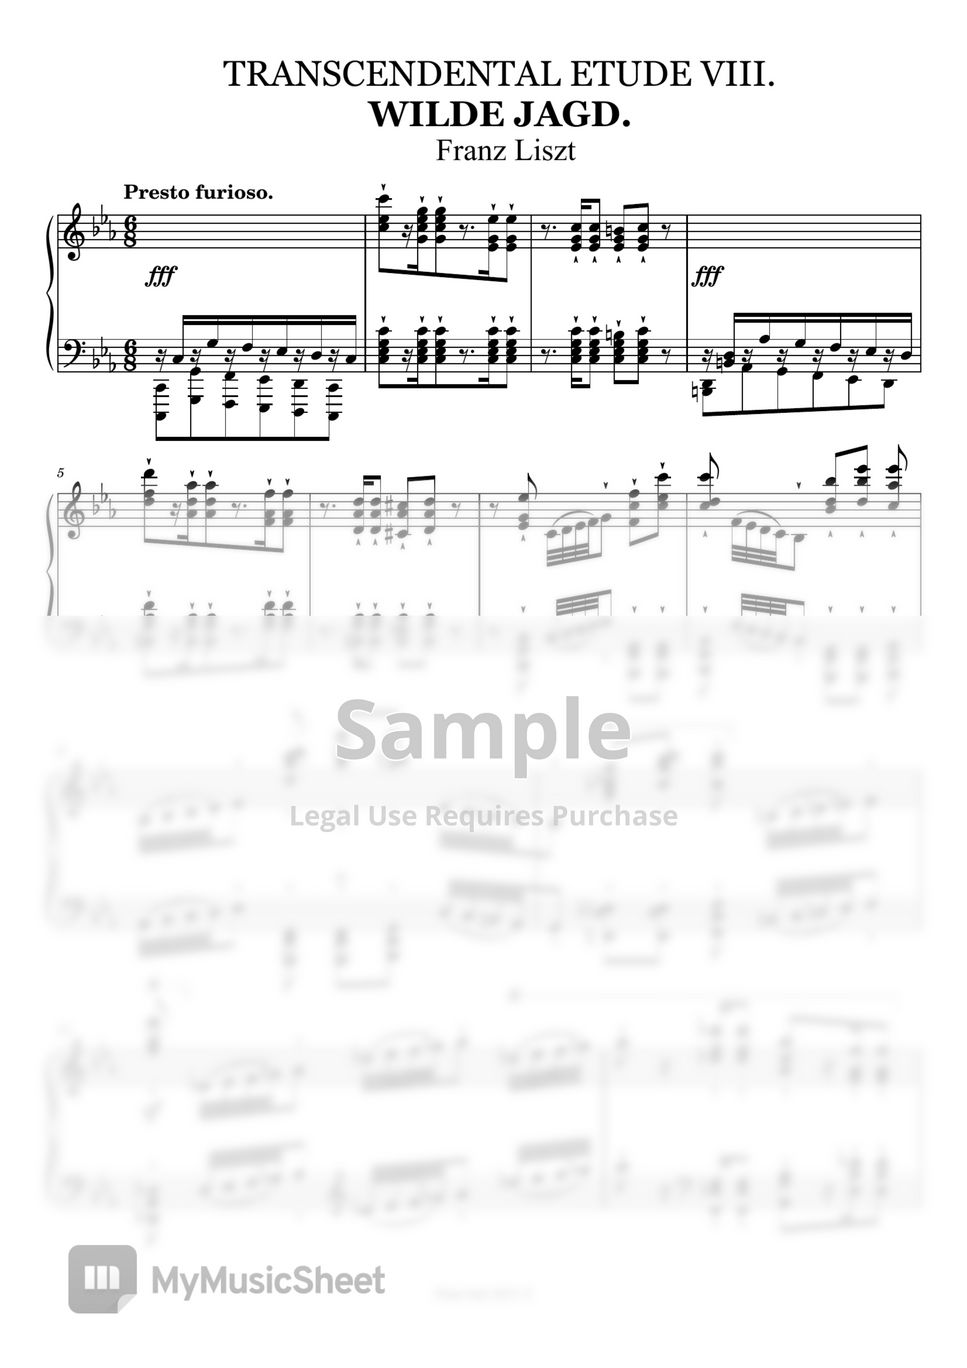 Franz Liszt - Transcendental Etude no.8 Wilde Jage by Piano Suit